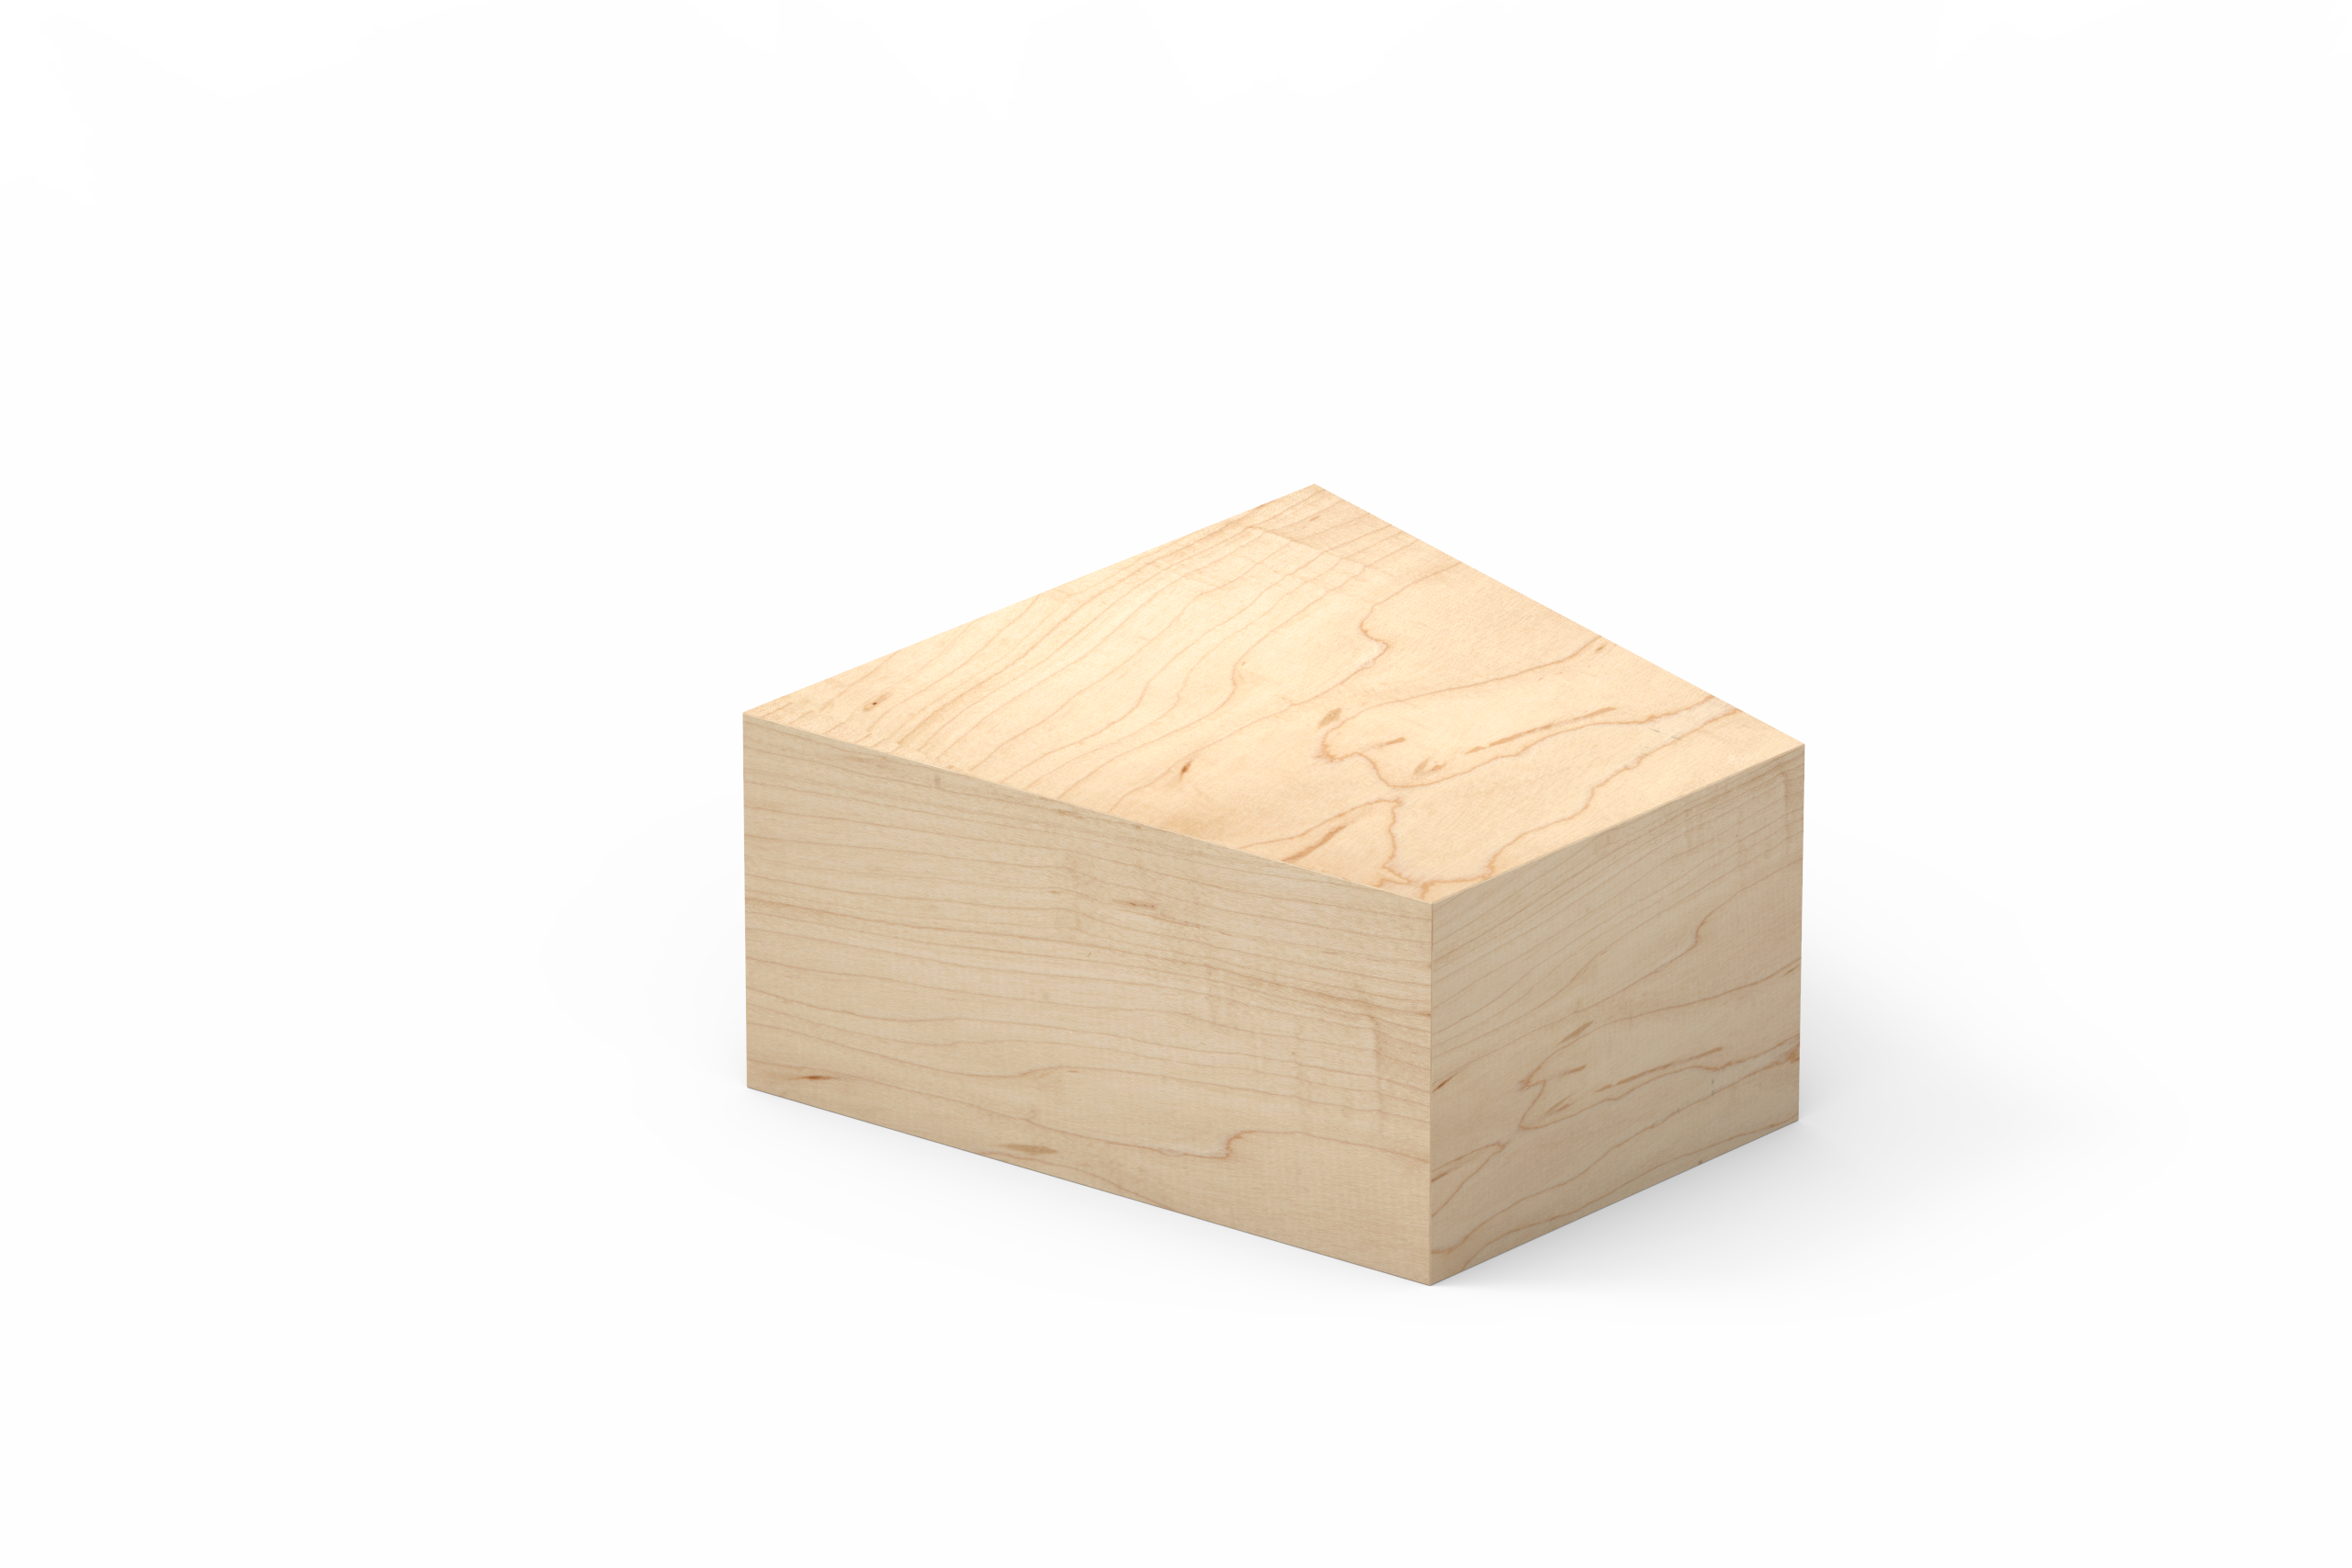 Workagile Huddlebox Camp C6 Module shown in plywood finish